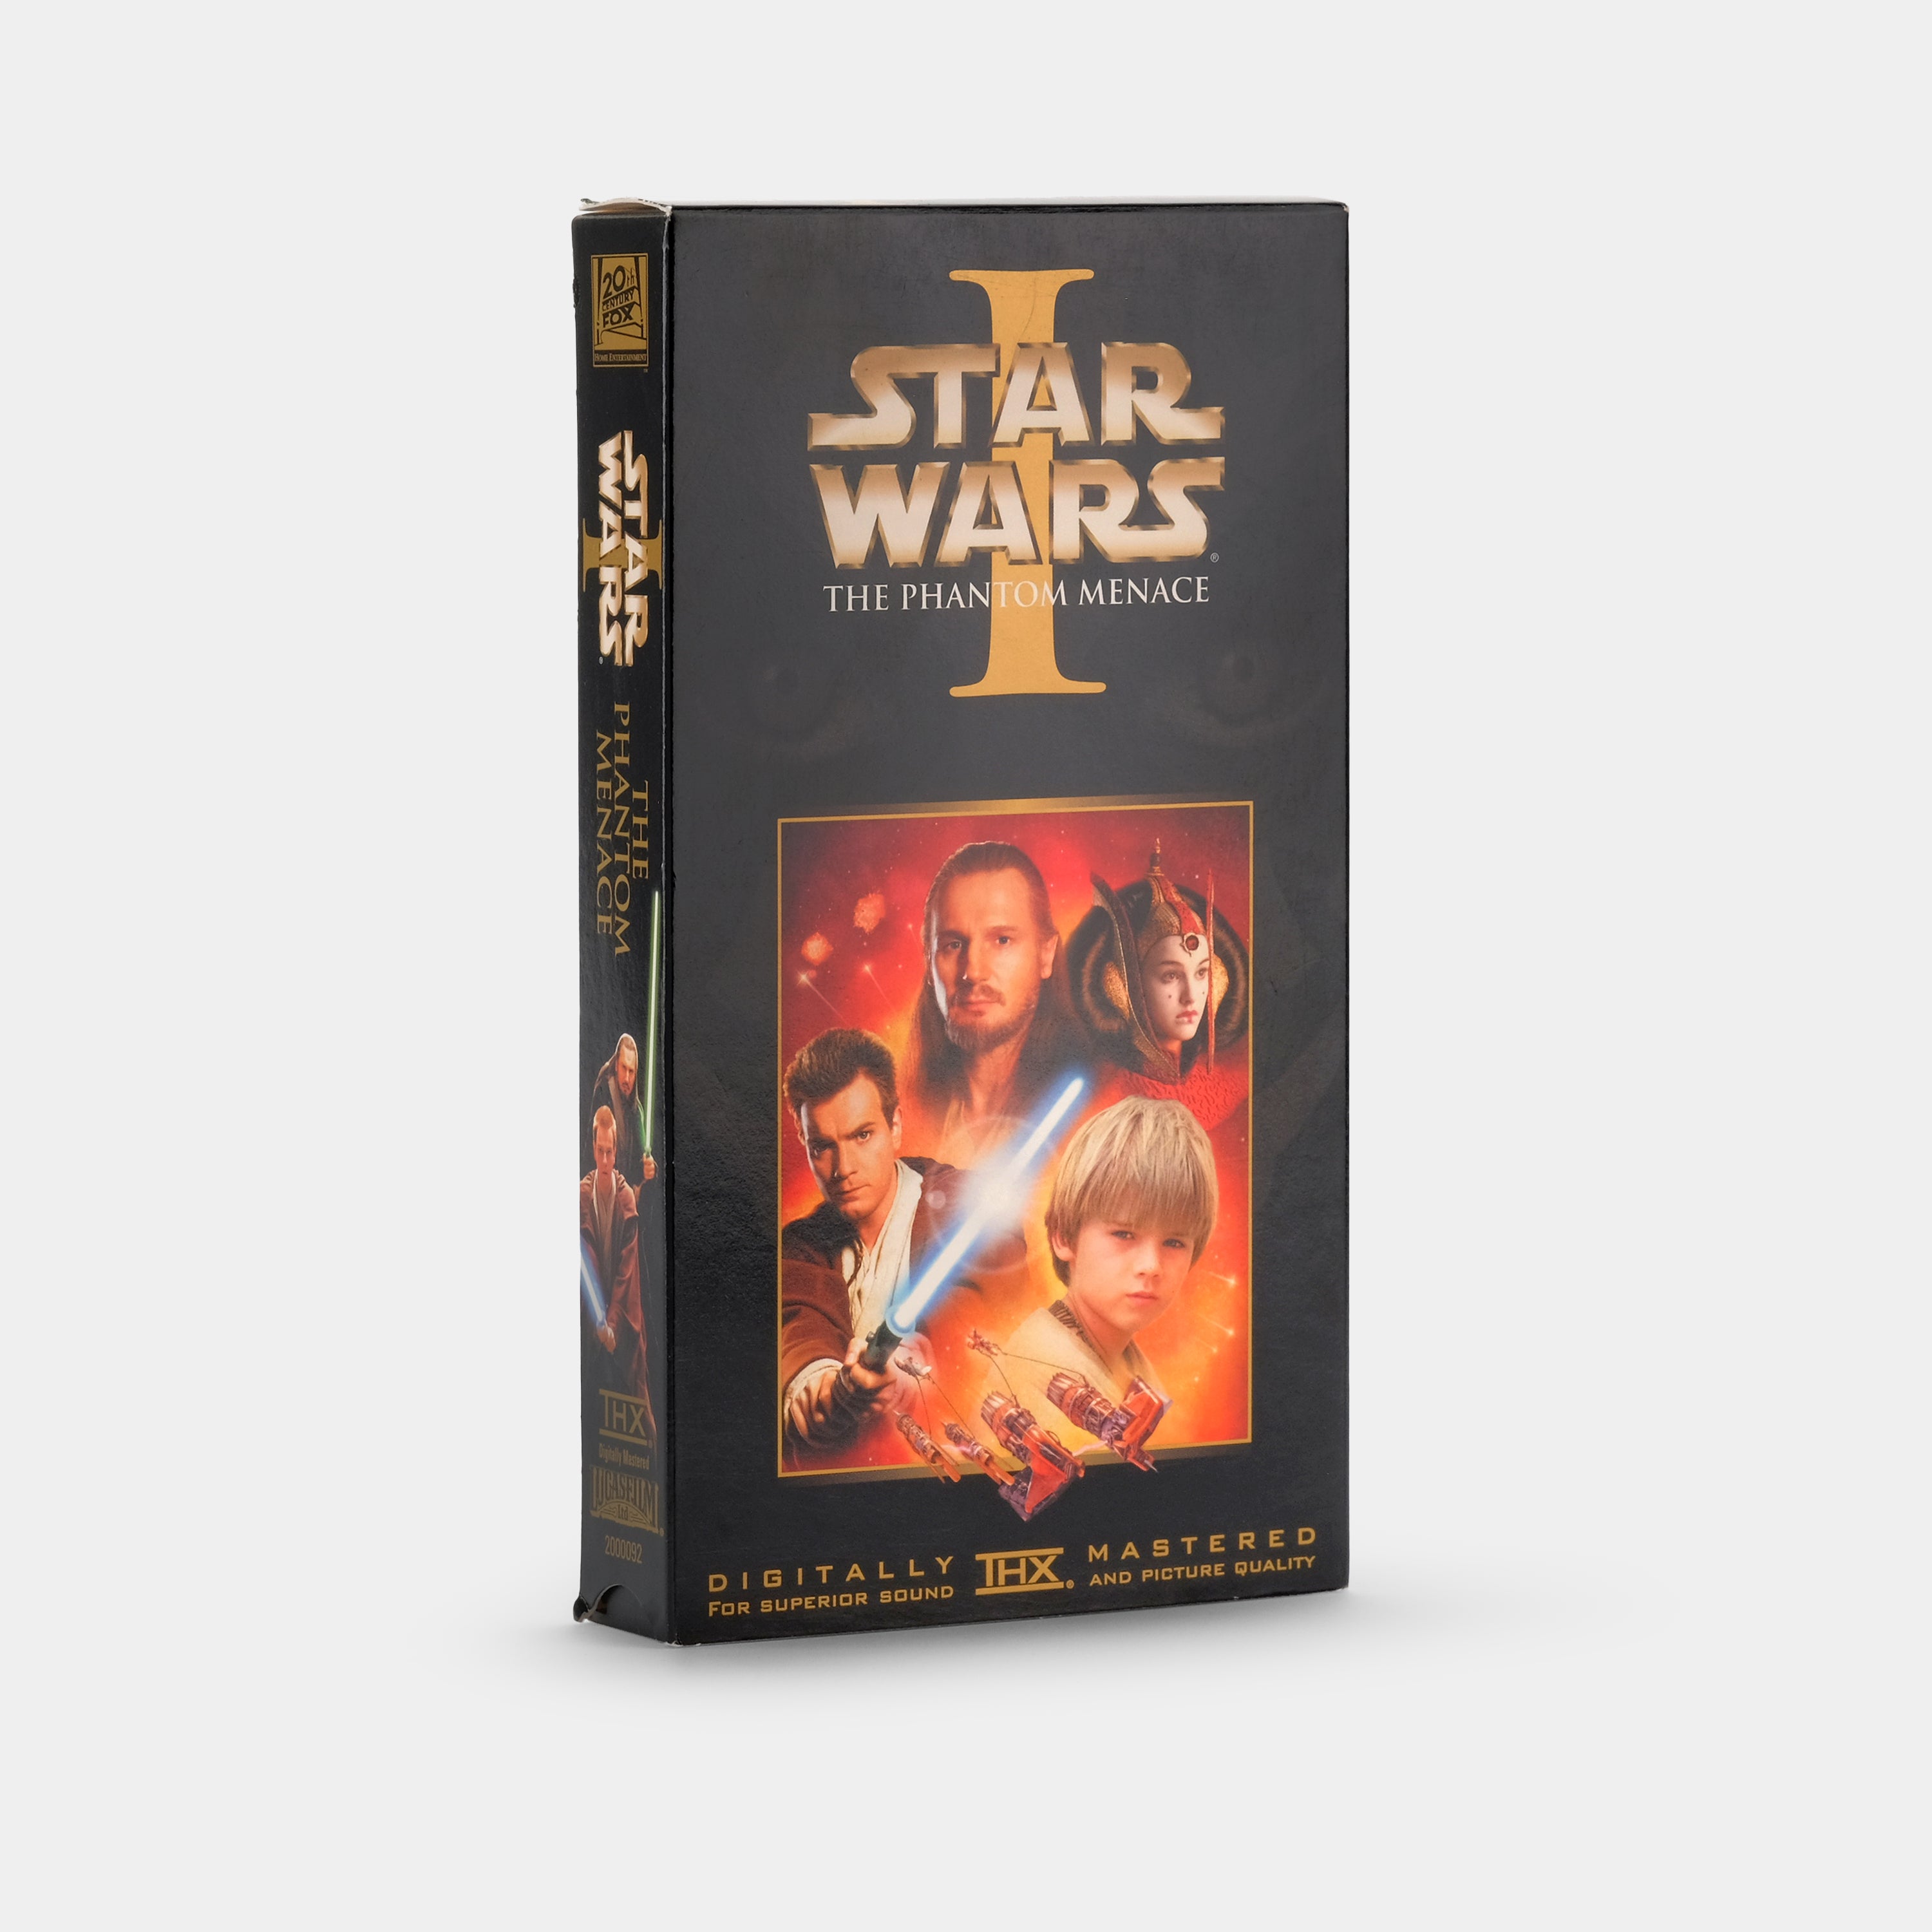 Star Wars: Episode I - The Phantom Menace VHS Tape